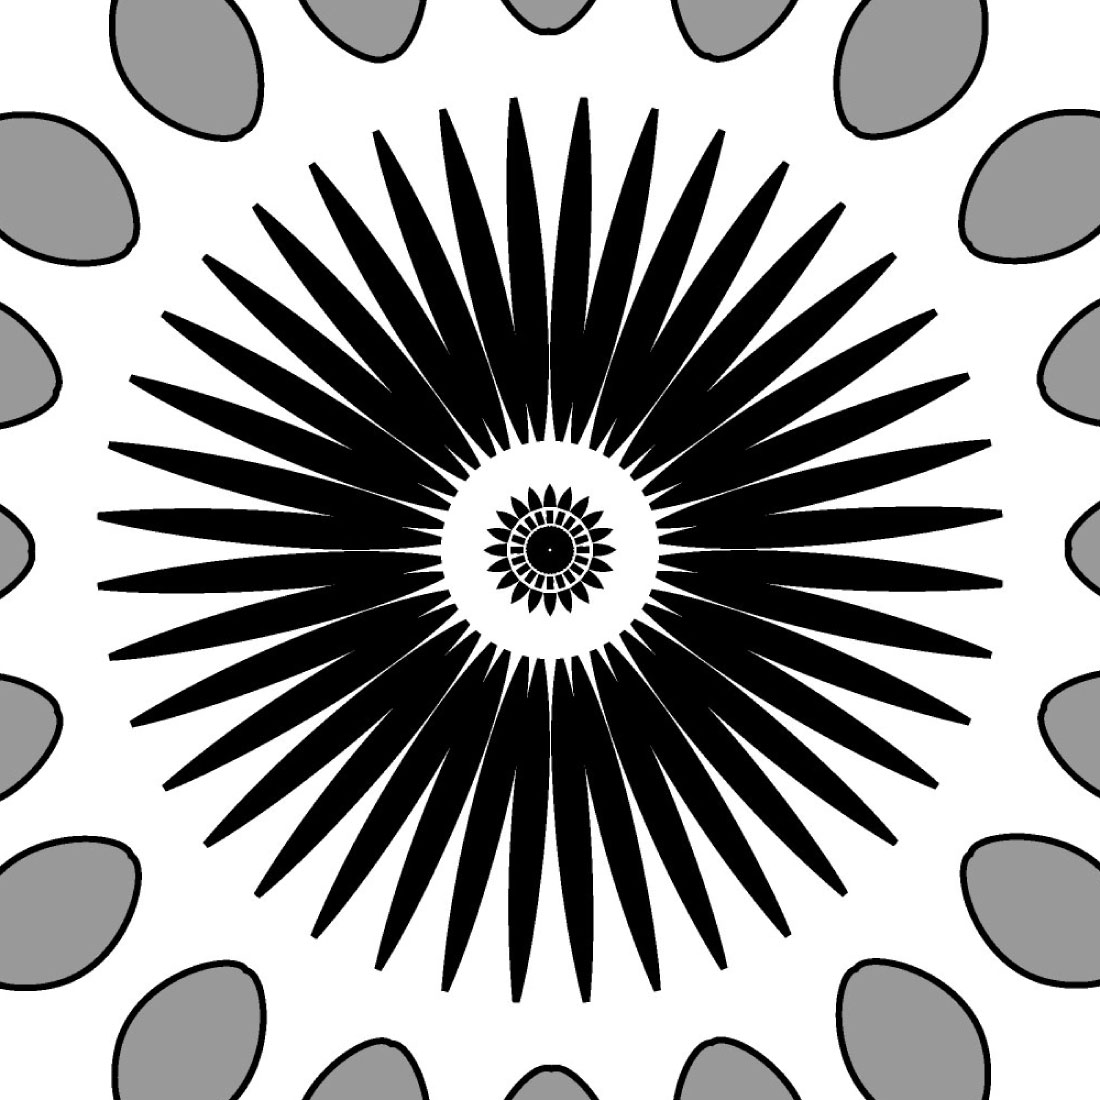 mandala art with black and white to ash1 753